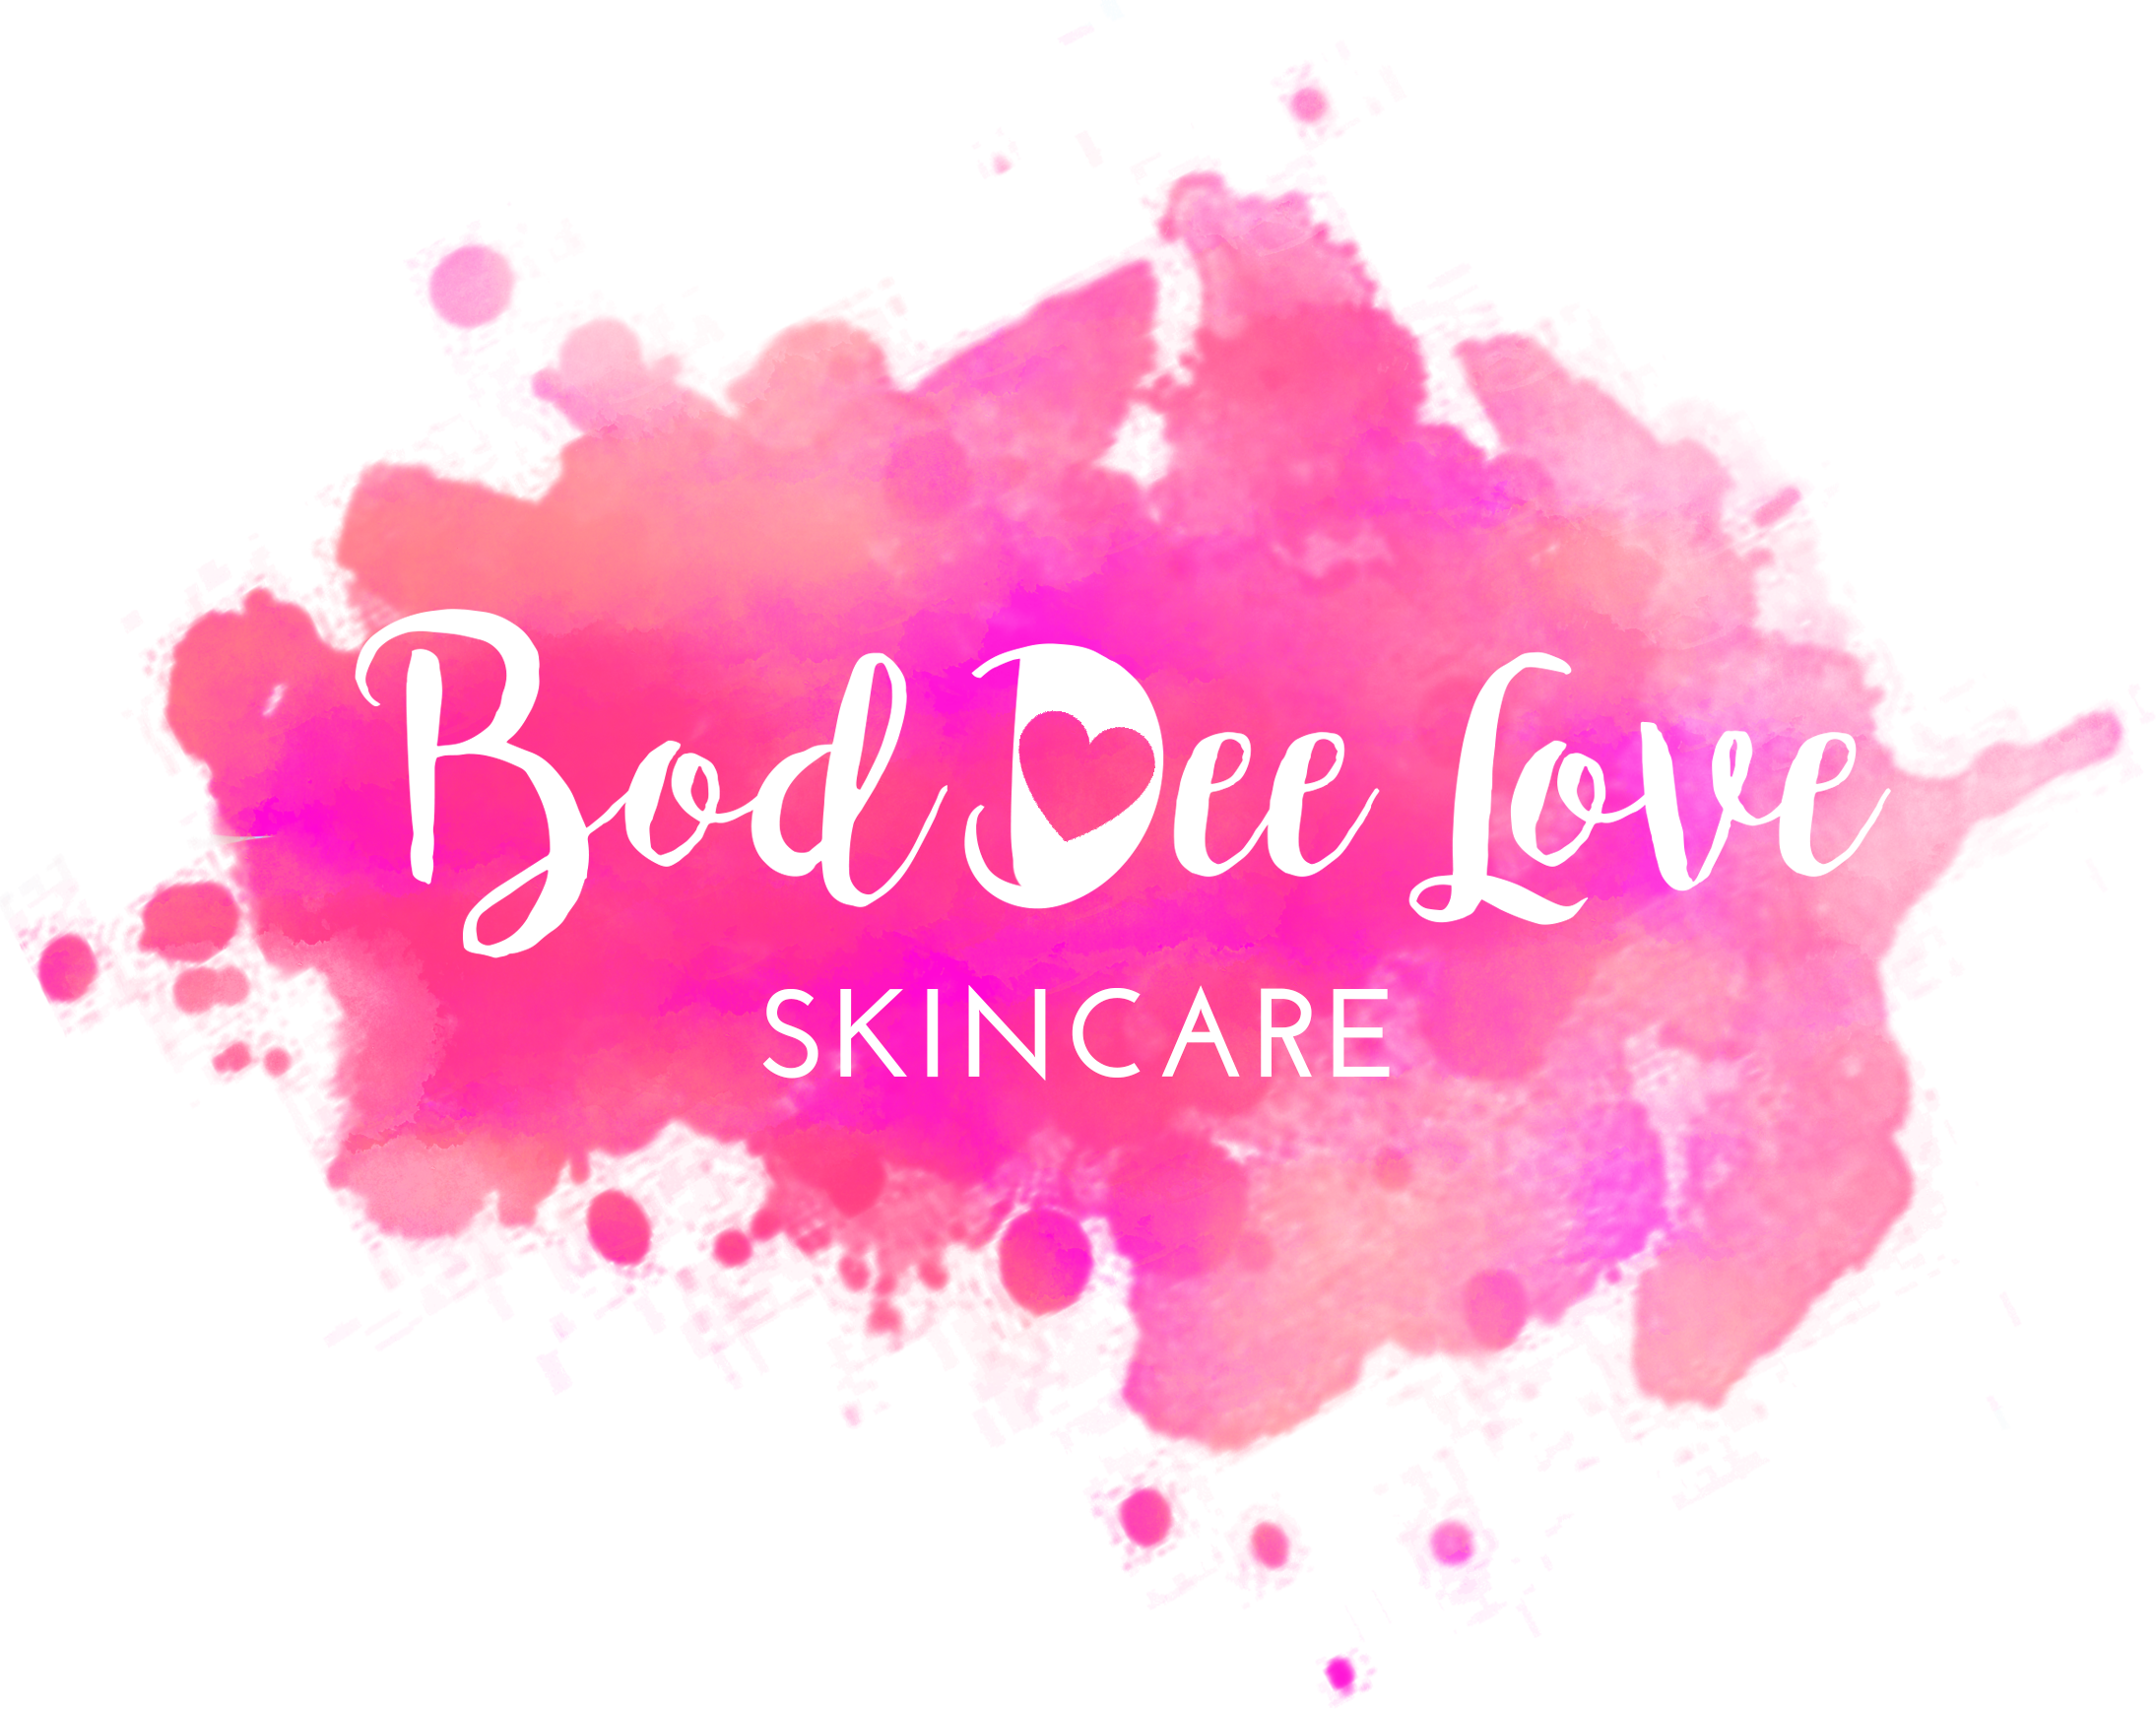 Bod Dee Love | Premium Skin Care Products | Boddeelove